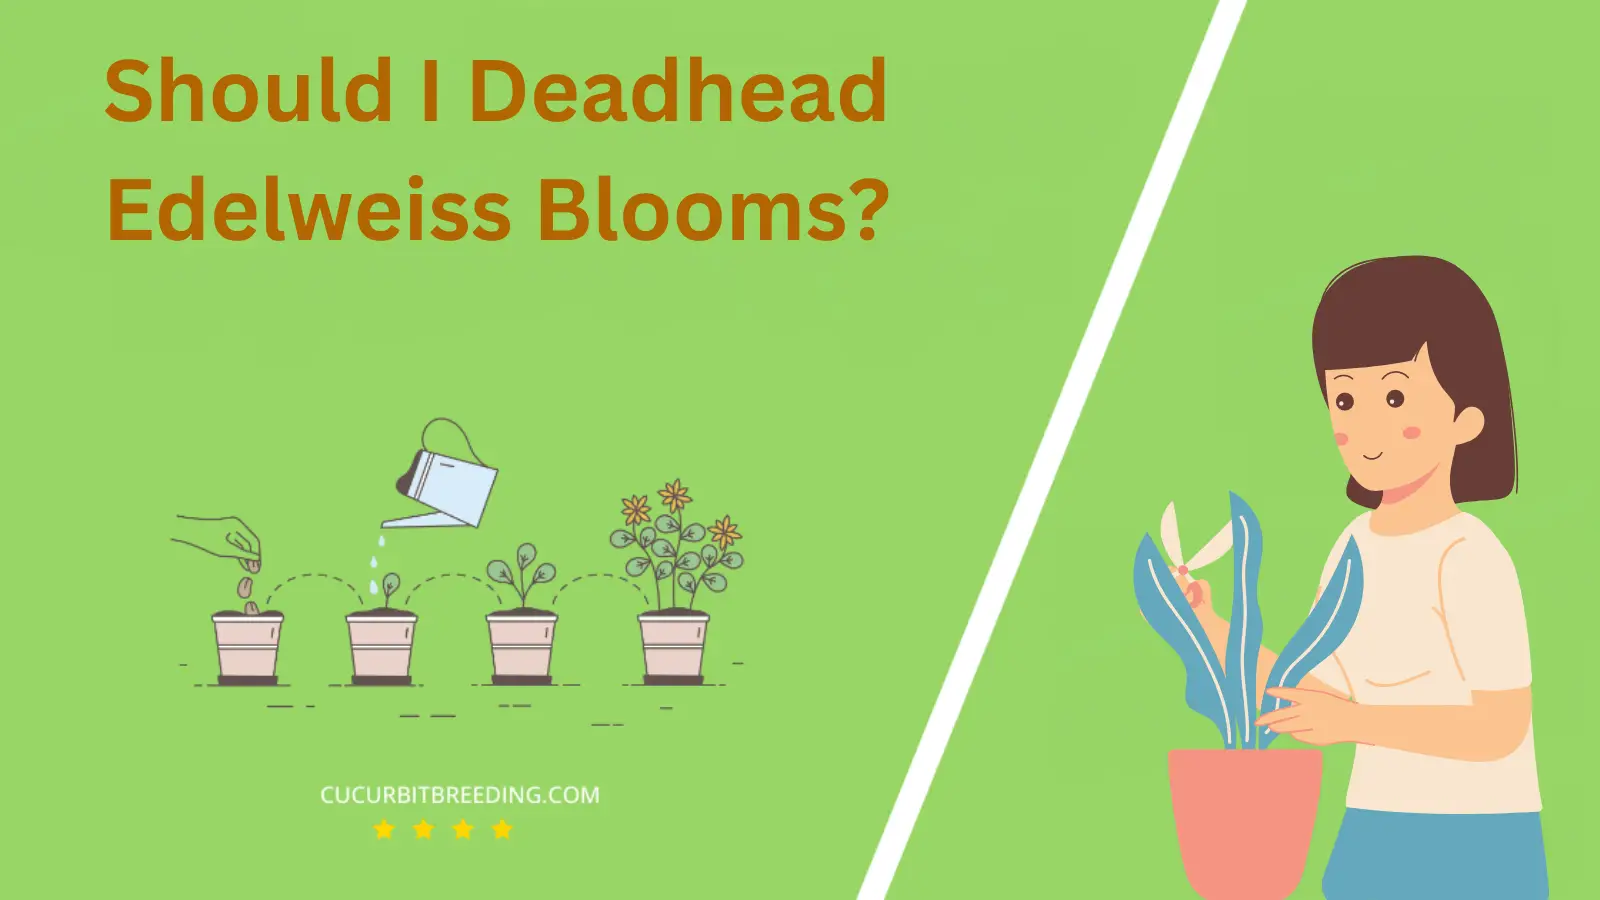 Should I Deadhead Edelweiss Blooms?